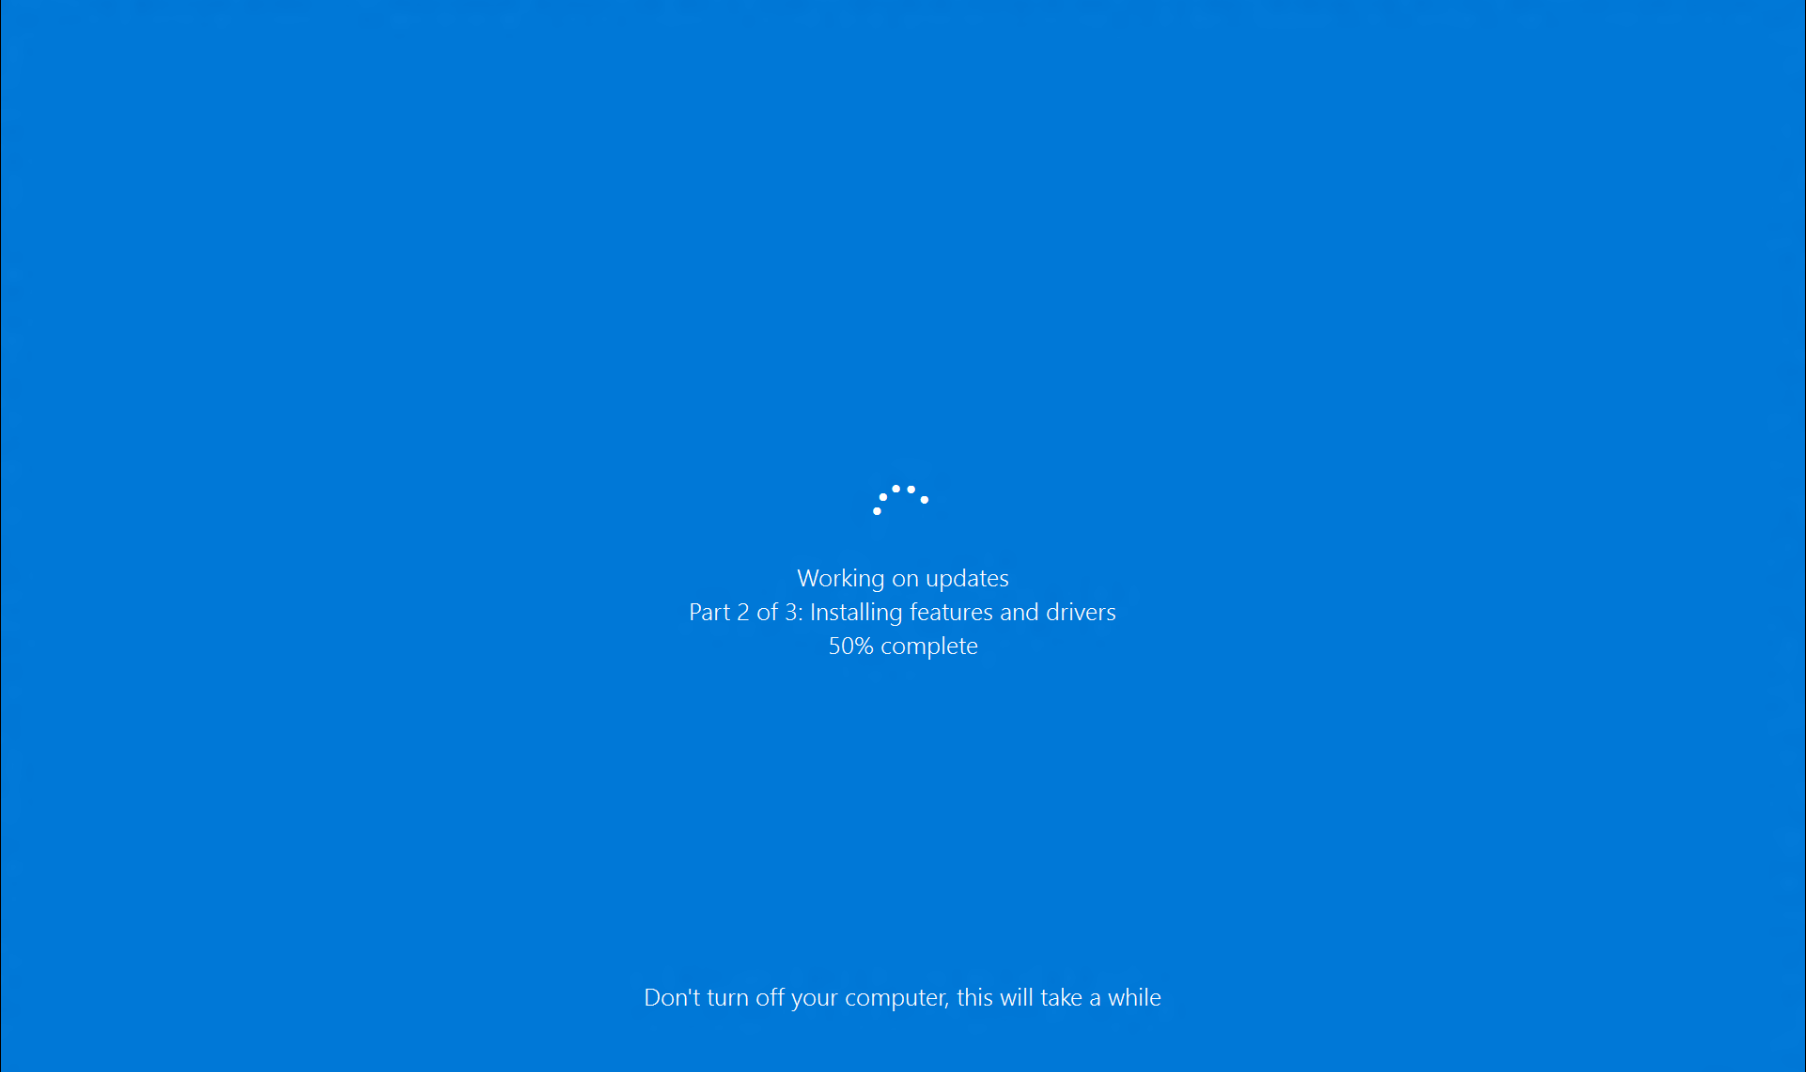 windows 10 update free